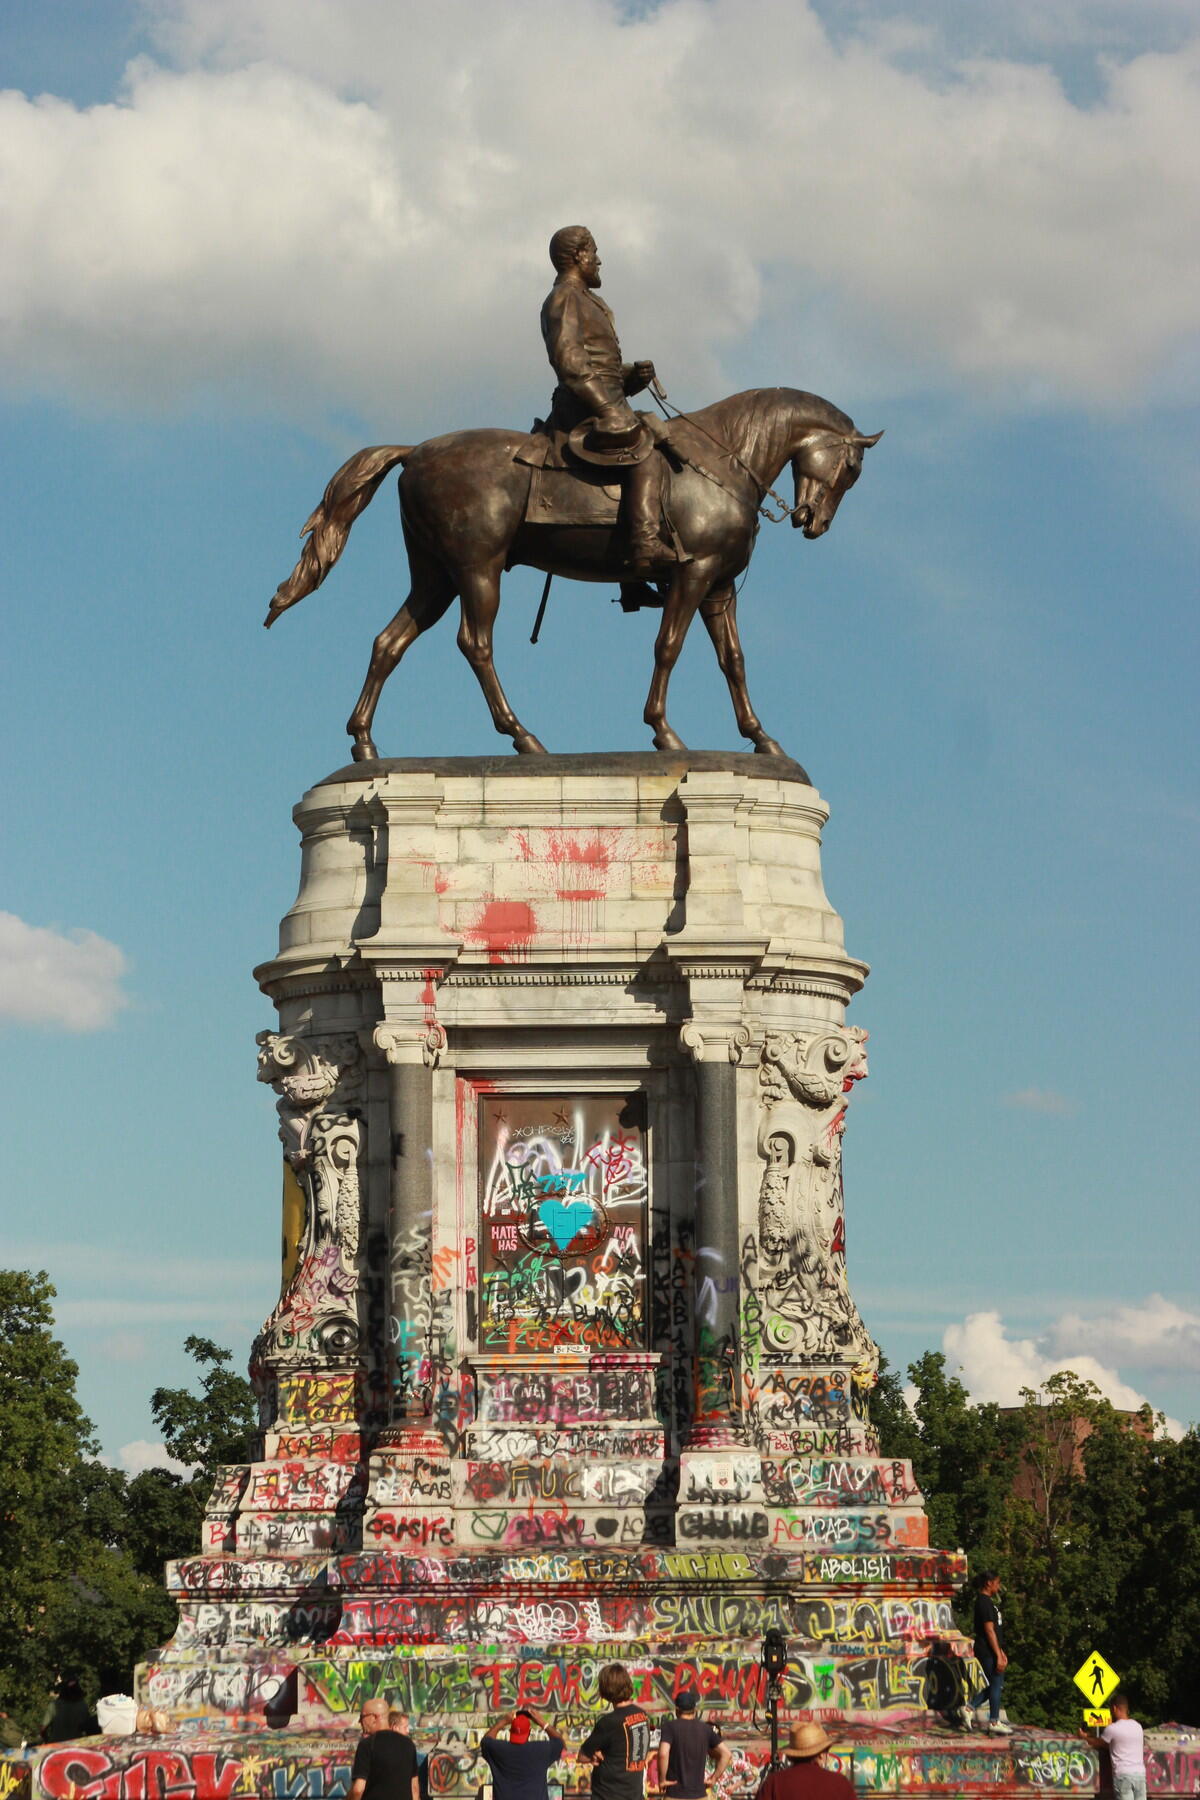 The Robert E. Lee monument in Richmond, Virginia.